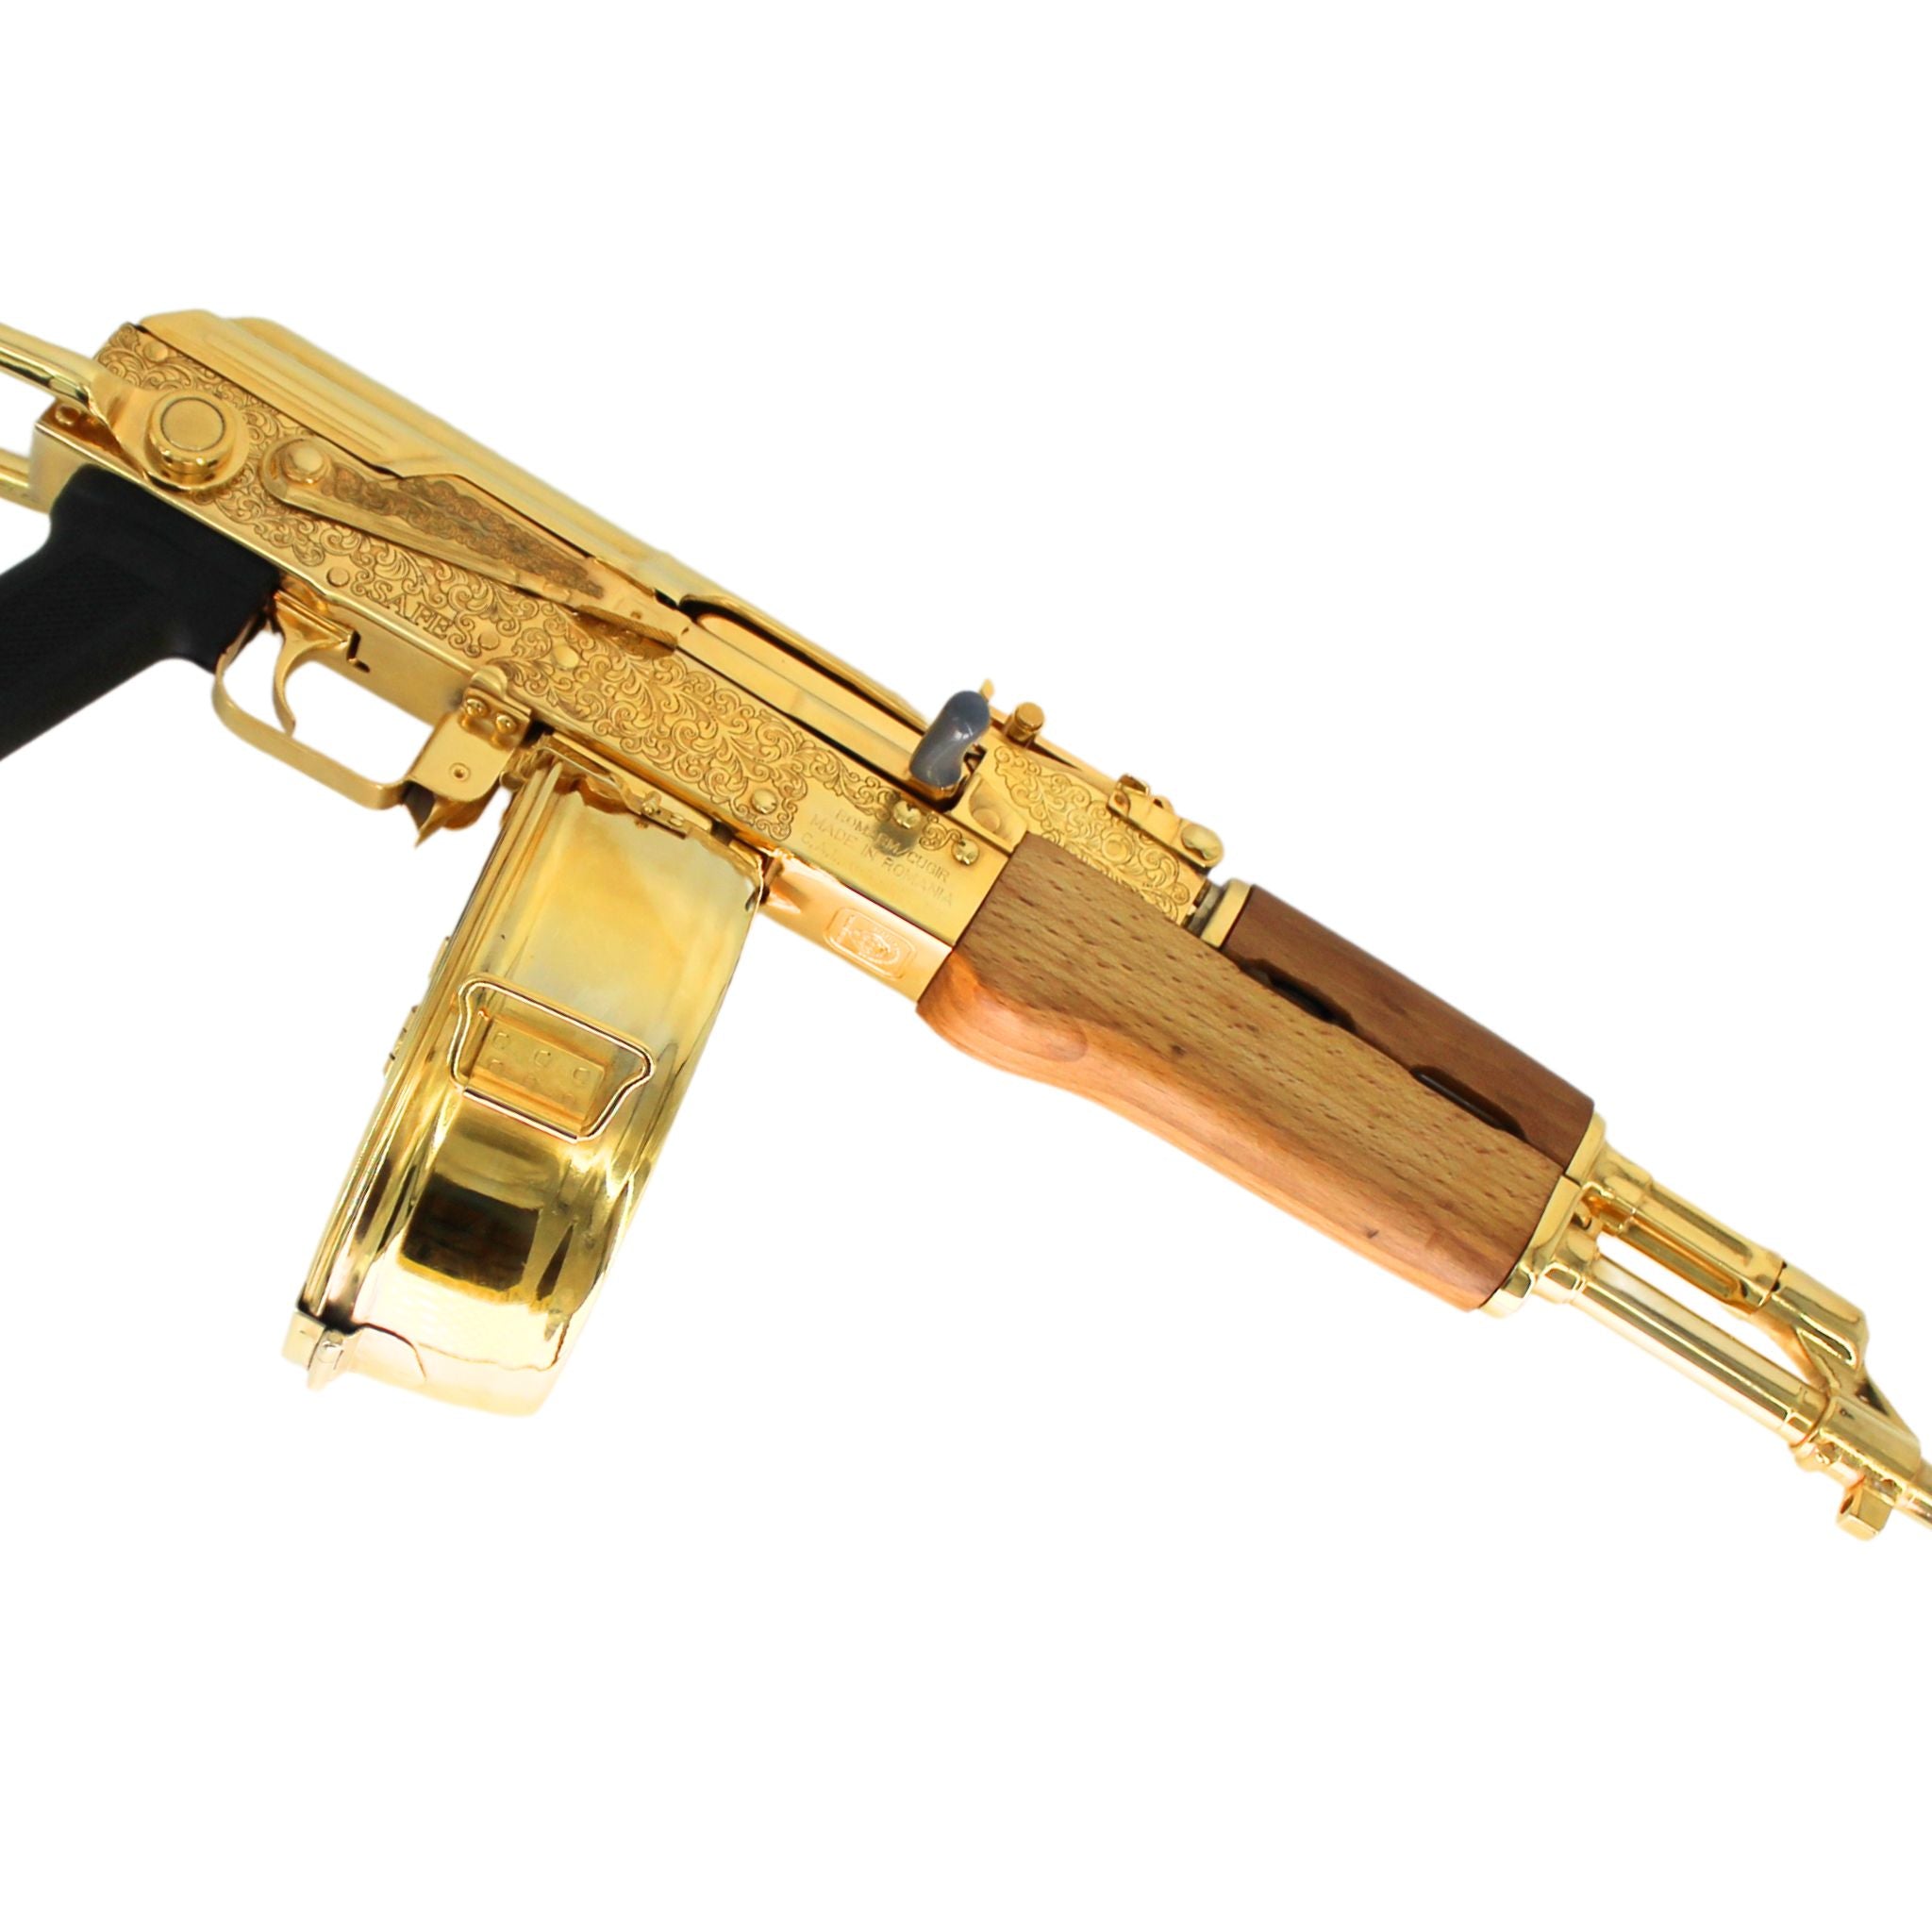 Ak 47 Century Arms Underfolder, 7.62x39mm,Engraved, 24 karat Gold Plated W/ 24k Gold Plated Drum Magazine  SKU: 6963834716262,Gold AK 47, Gold Gun, Gold Firearm